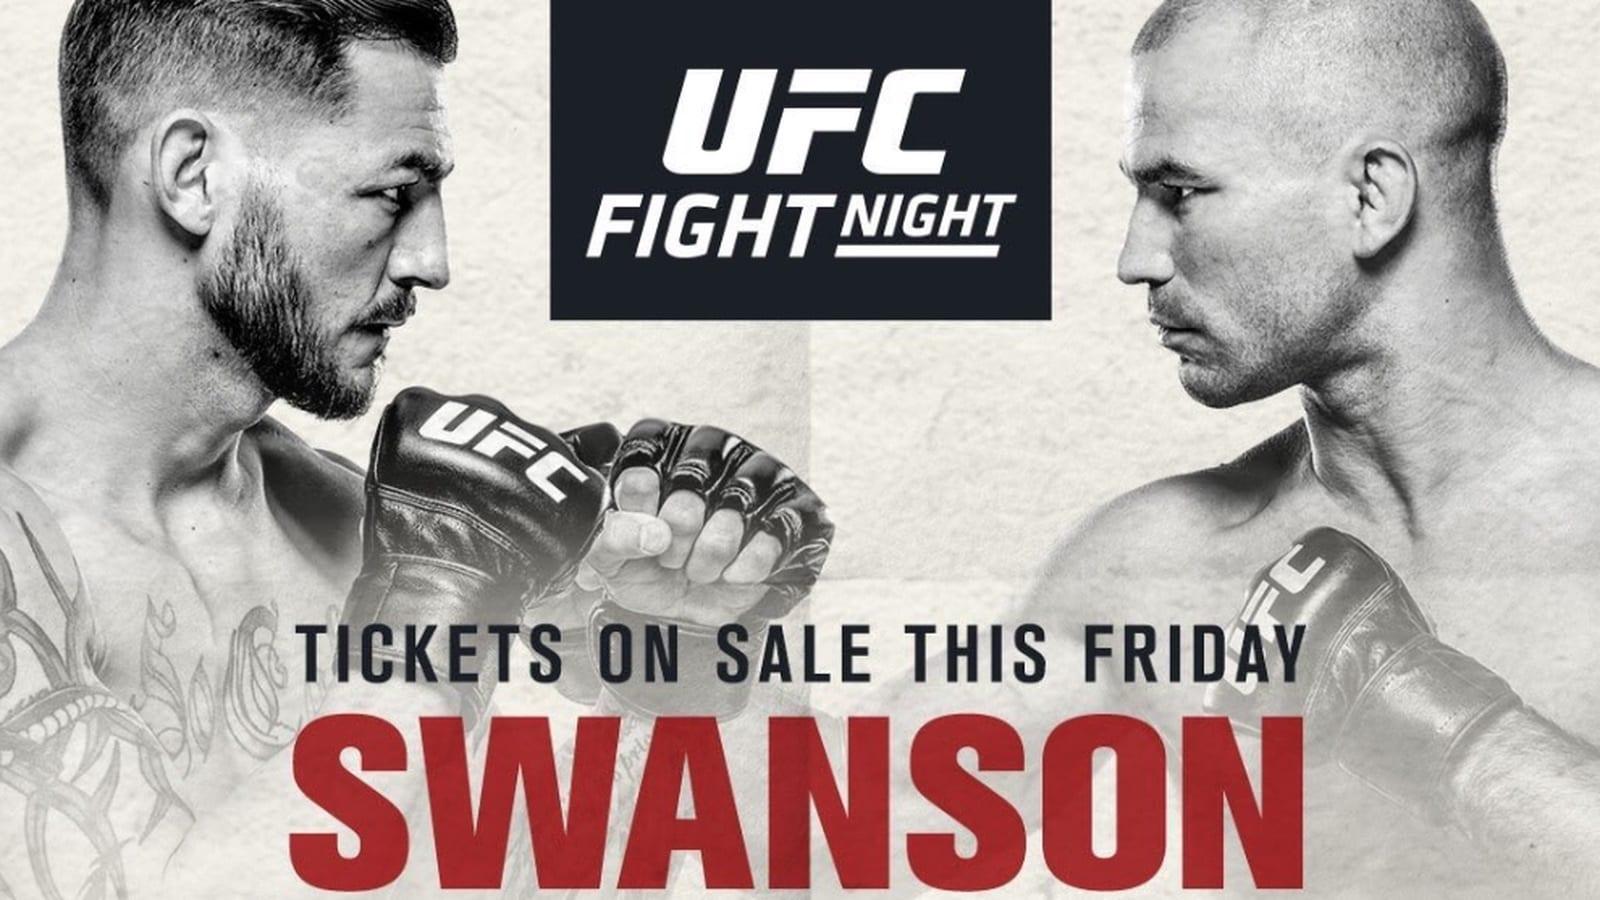 UFC Fight Night 108: Swanson vs. Lobov backdrop